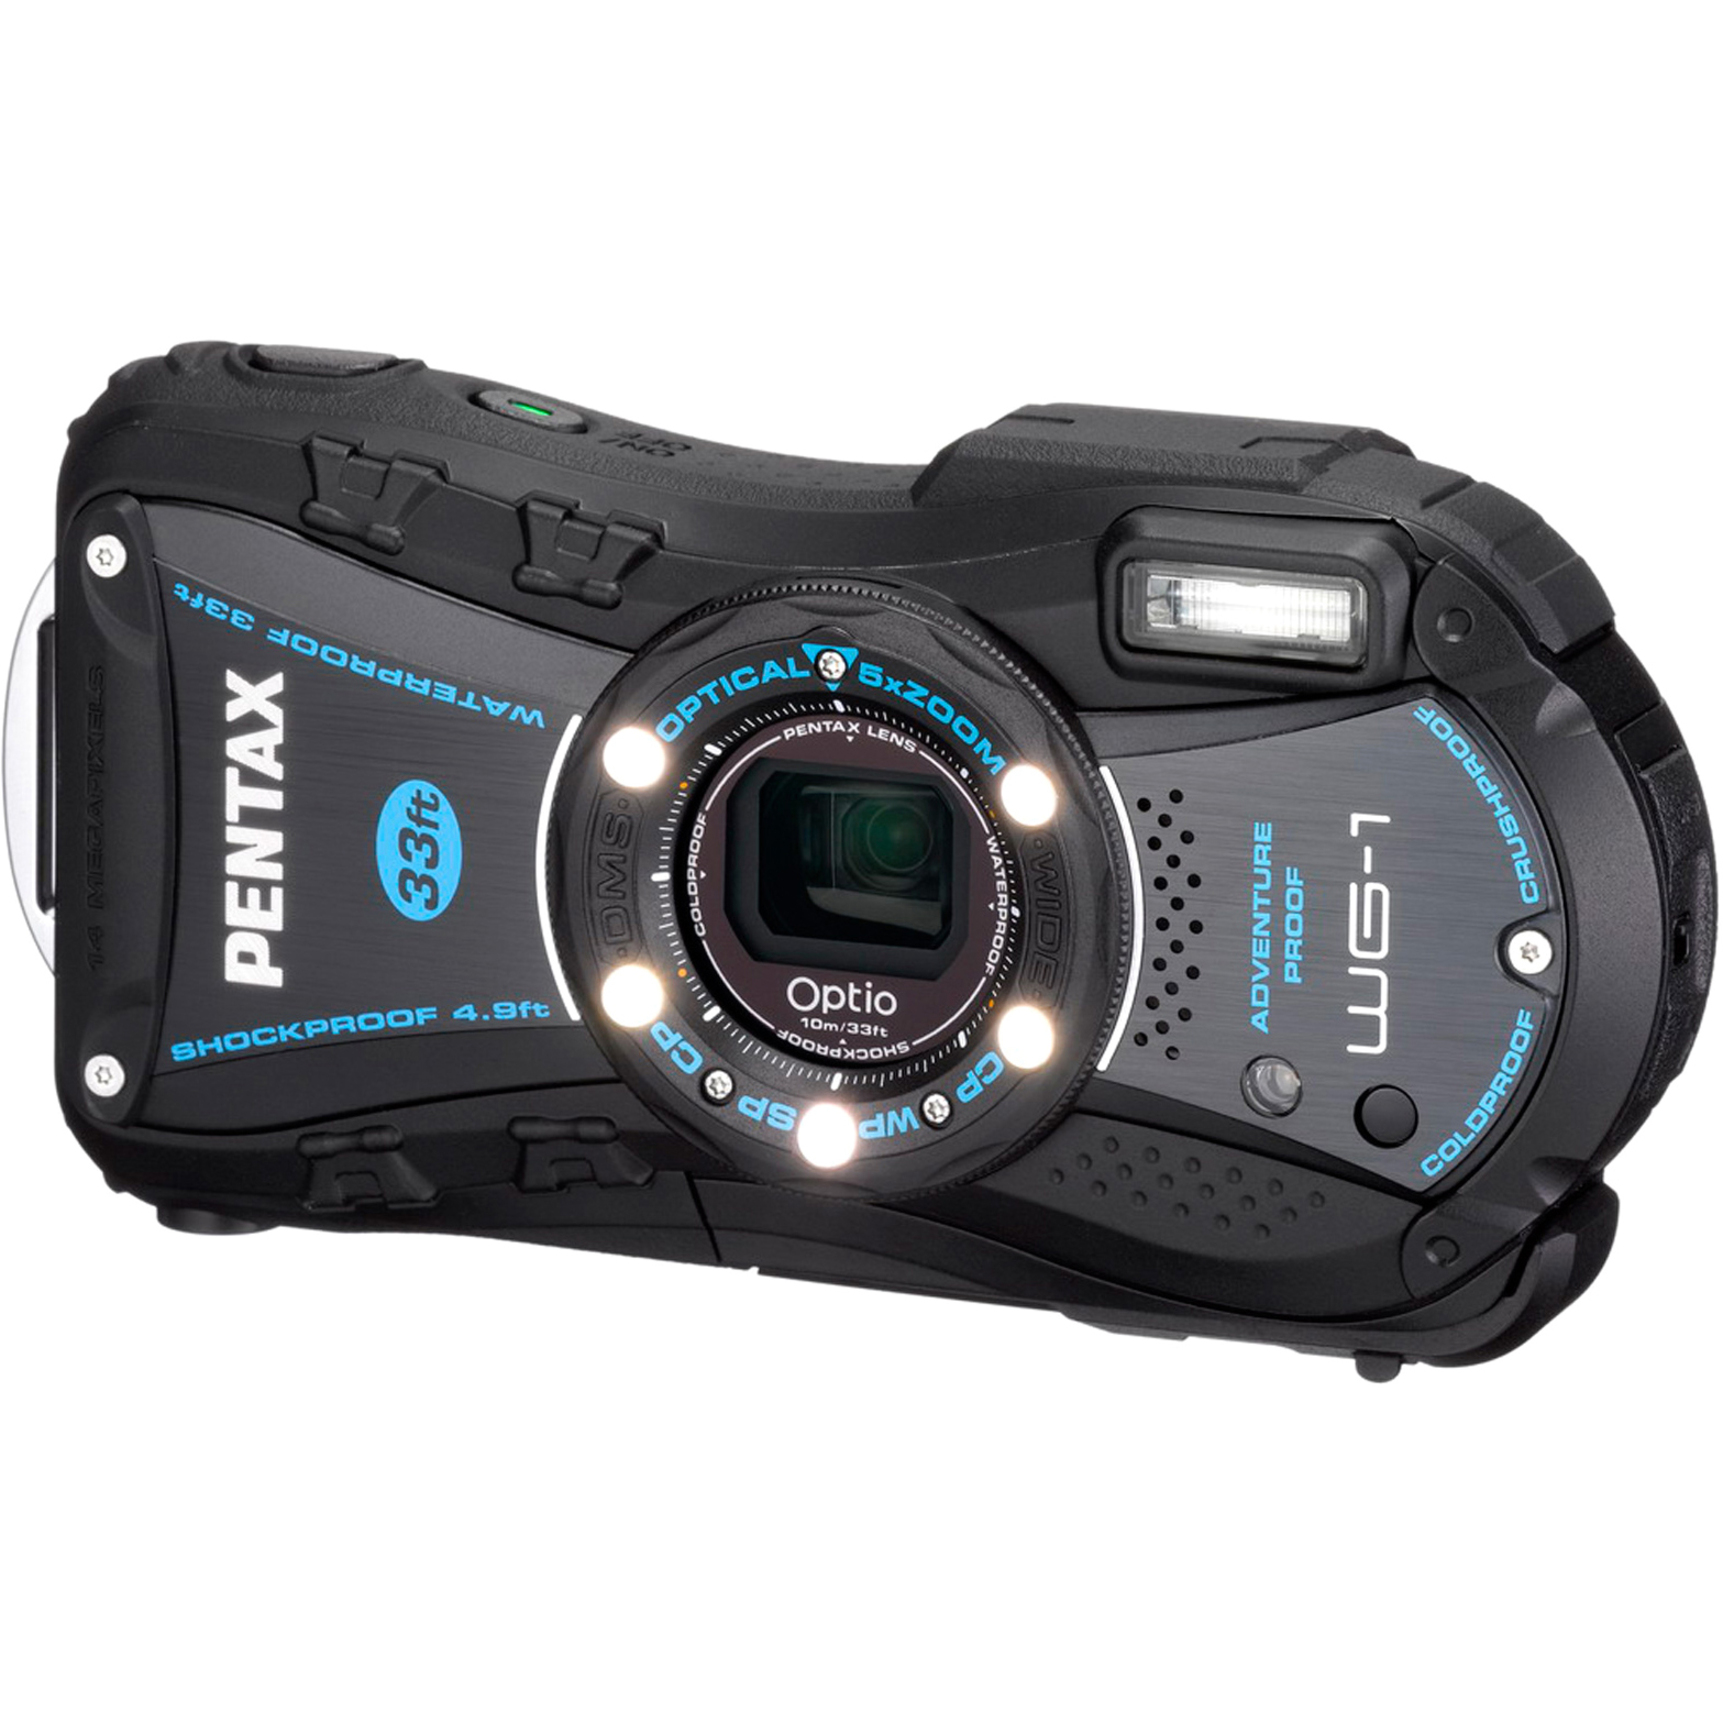 Pentax Optio WG-1 14 Megapixel Compact Camera, Black - image 1 of 2